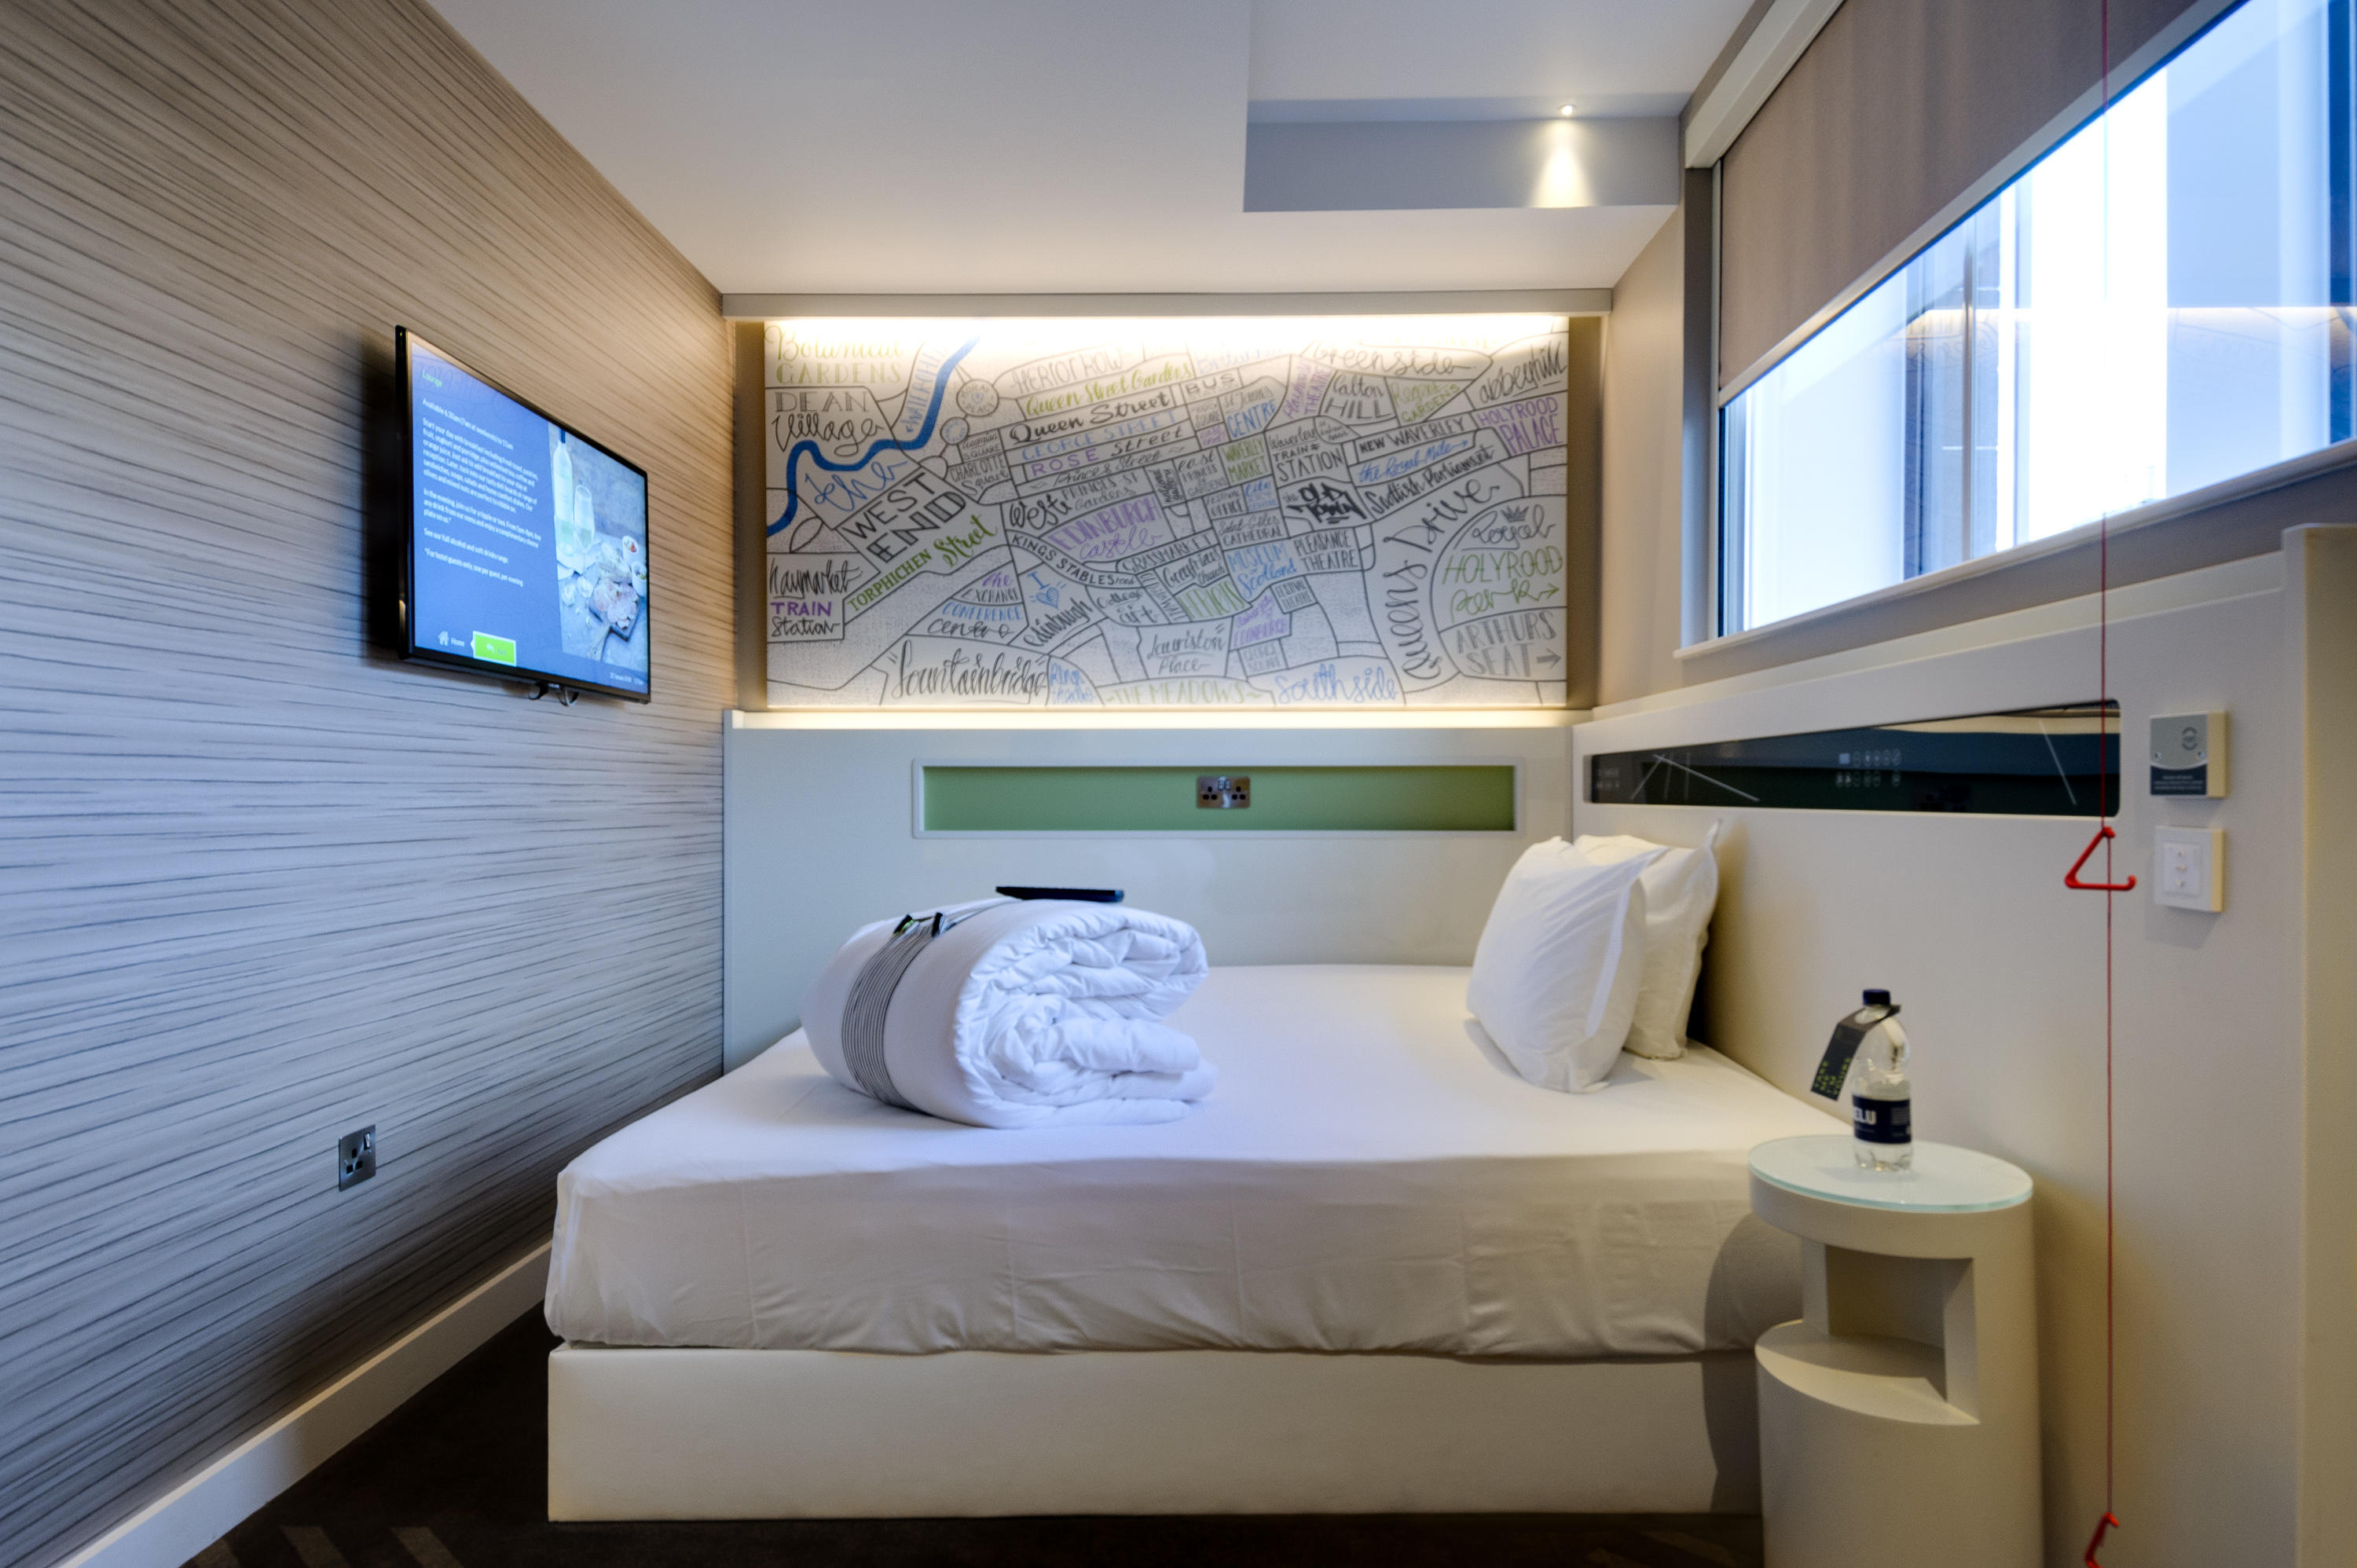 hub by Premier Inn accessible room hub by Premier Inn London Covent Garden hotel London 03333 213104